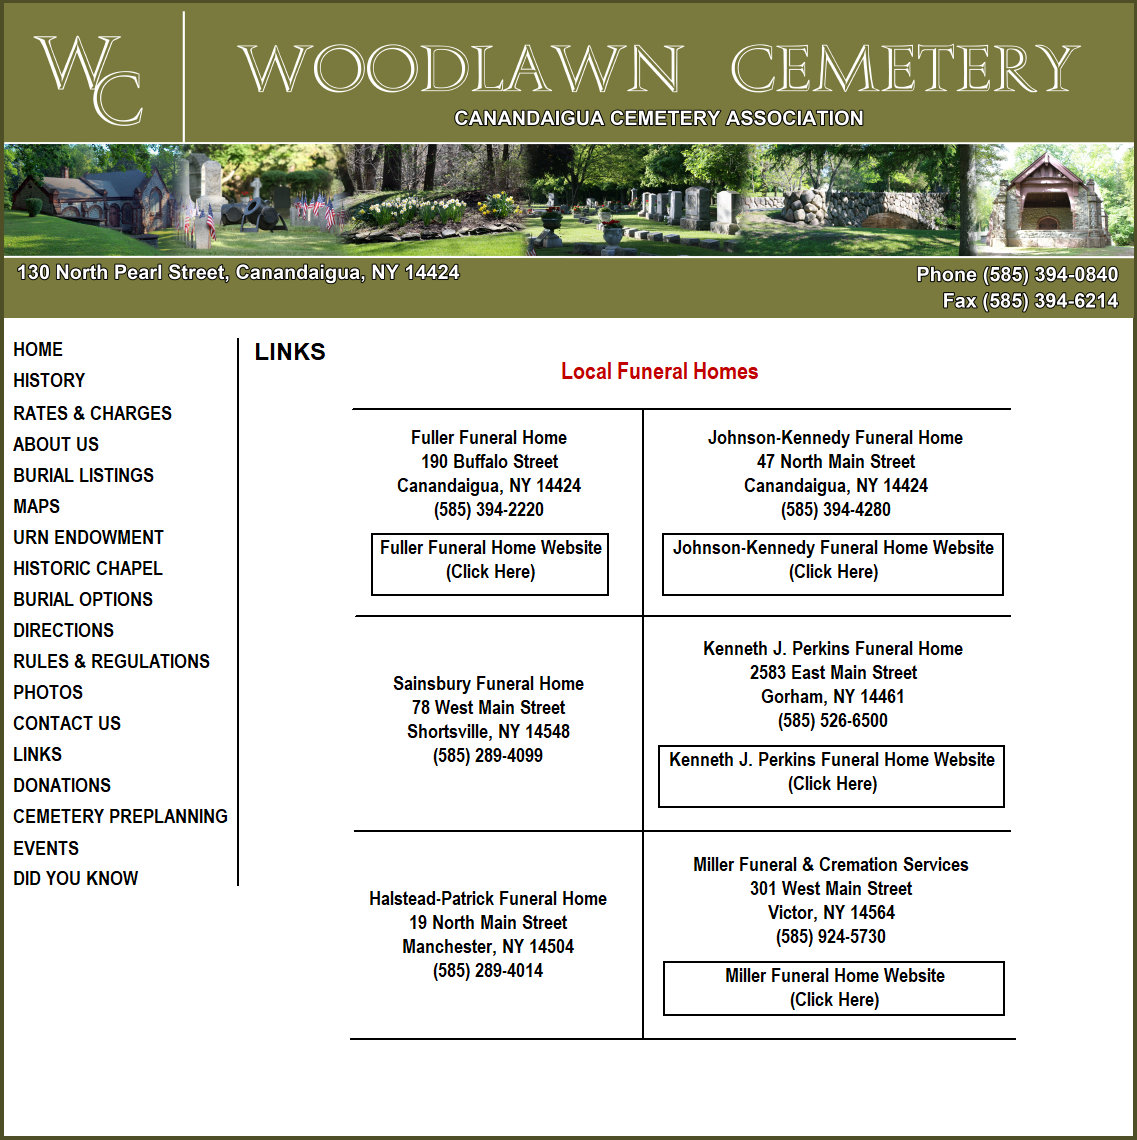 woodlawn_cemetery017001.jpg